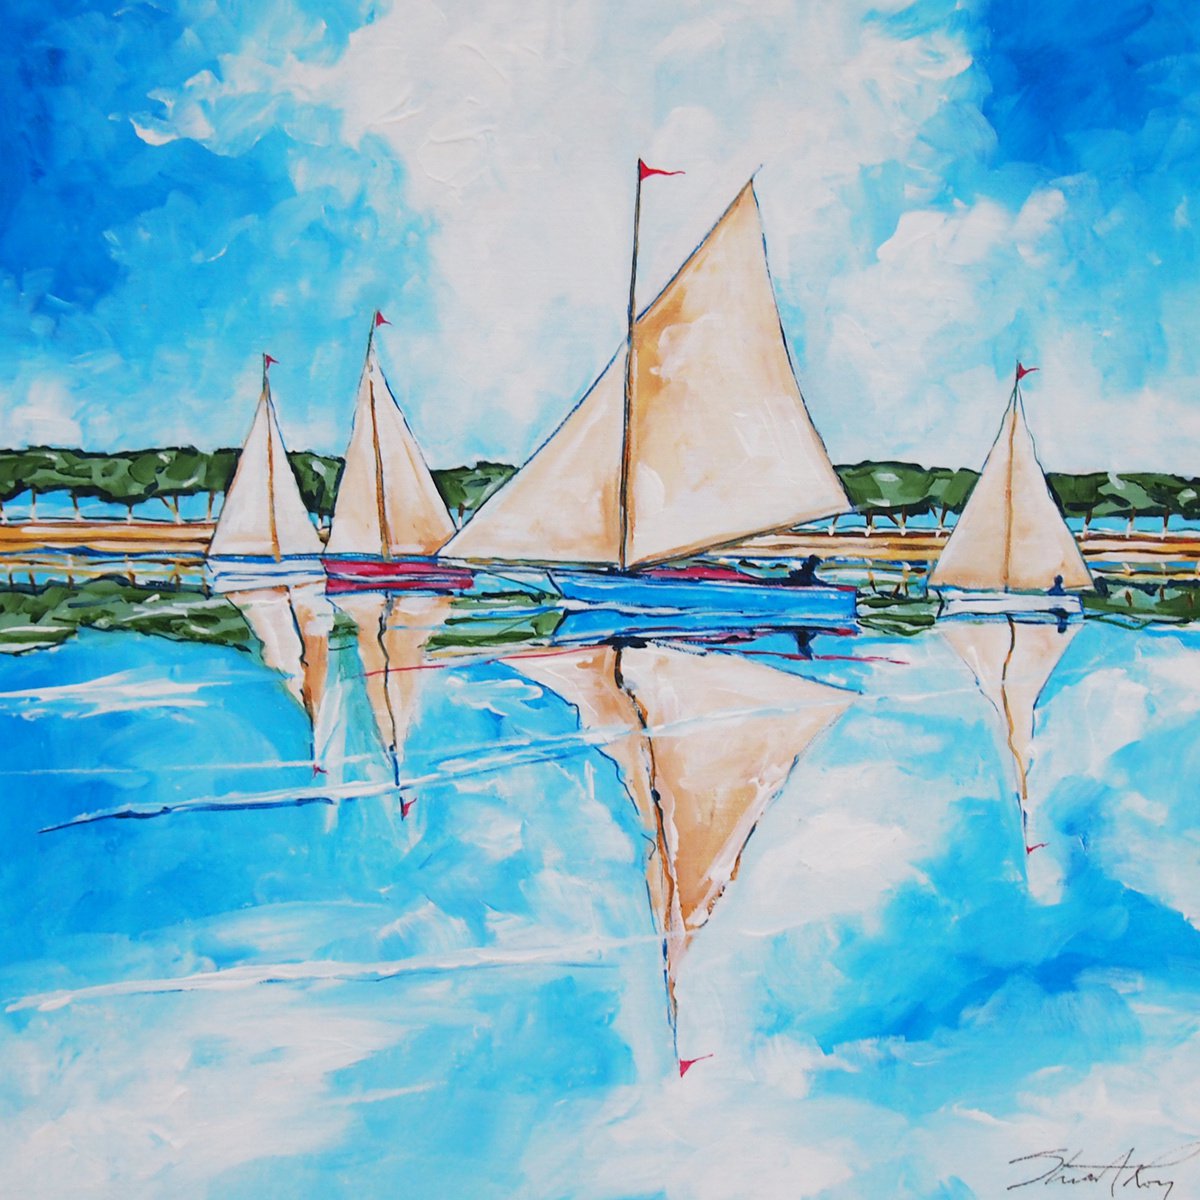 Sailing boats 2 by Stuart Roy